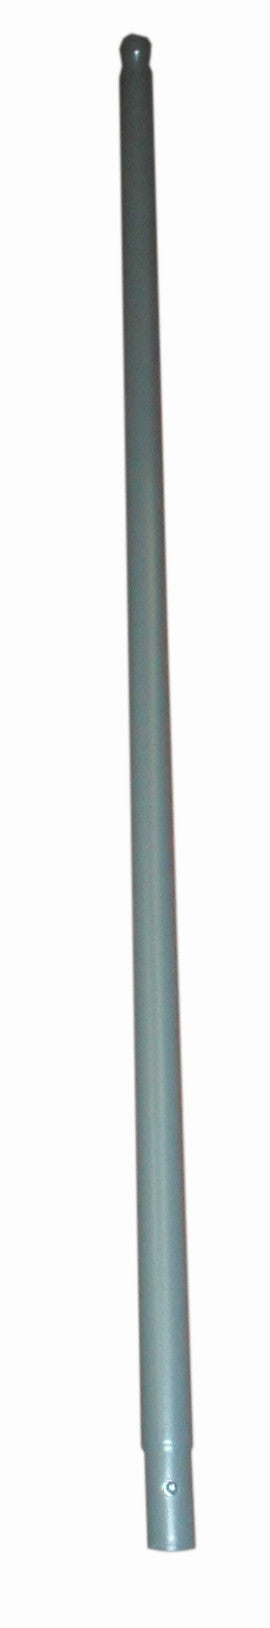 Zz-gazebo mt.3x6 magnum-tubo n.3